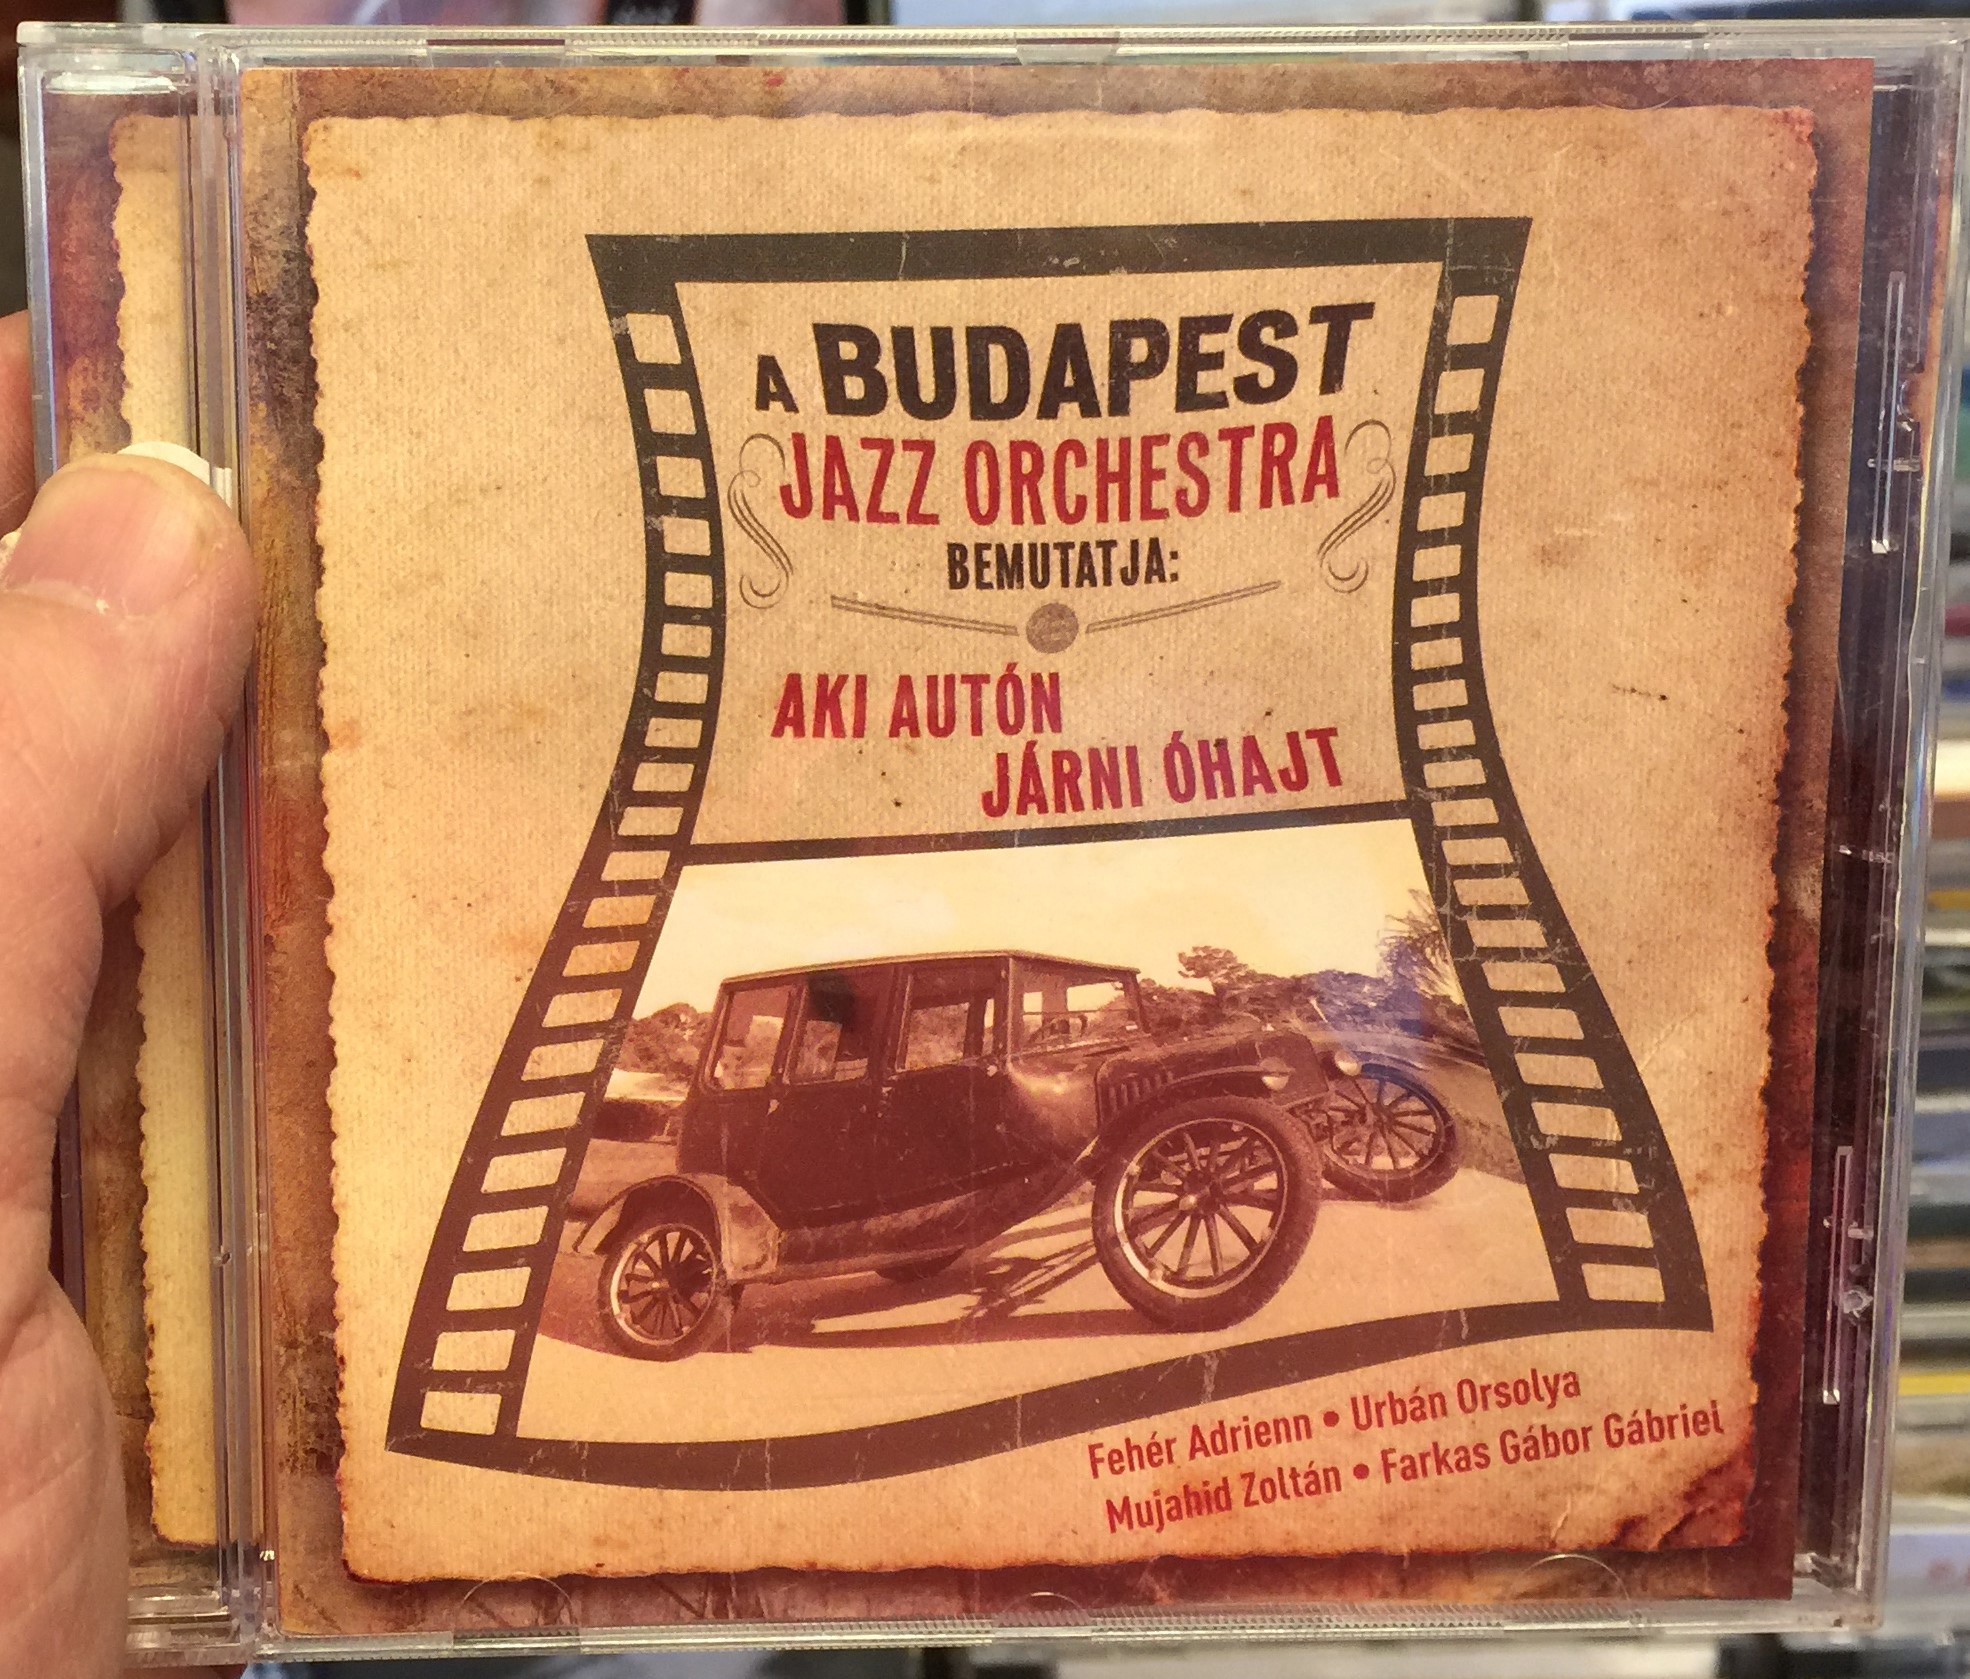 a-budapest-jazz-orchestra-bemutatja-aki-auton-jarni-ohajt-feher-adrienn-urban-orsolya-mujahid-zoltan-farkas-gabor-gabriel-bjo-records-audio-cd-2014-1-.jpg